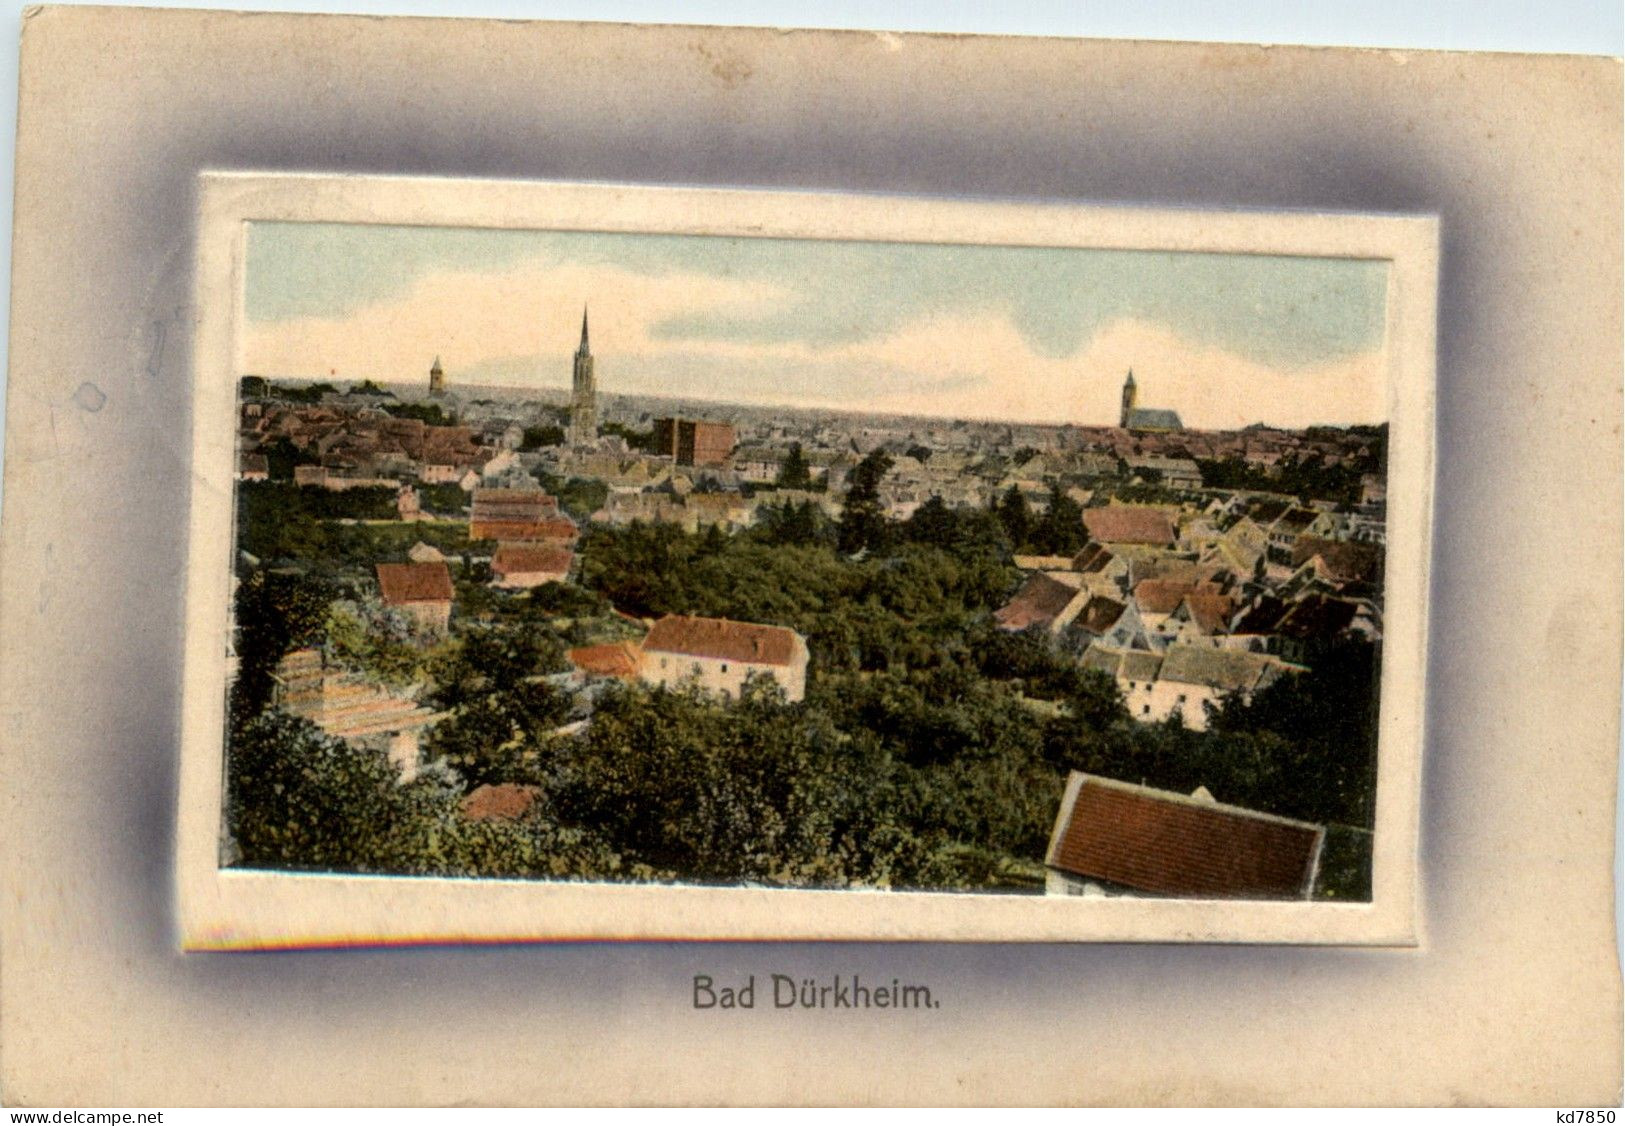 Bad Dürckheim - Bad Dürkheim